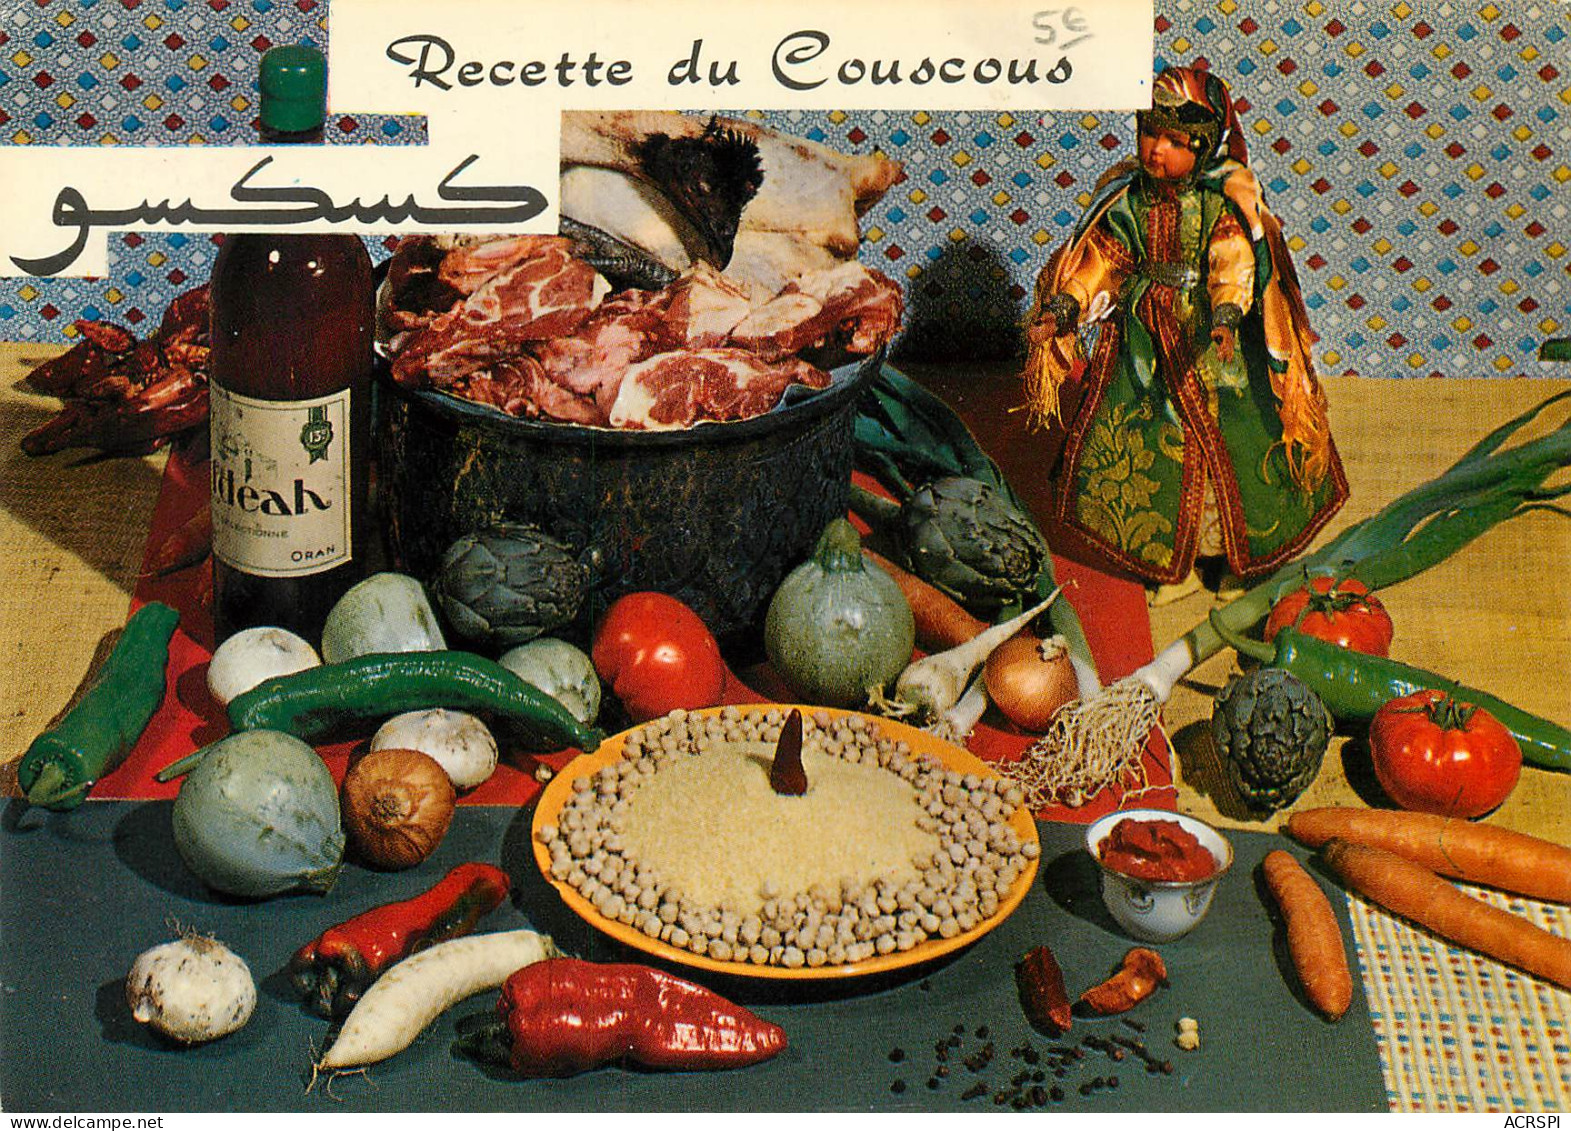 Recette  Le Couscous  34   (scan Recto-verso)MA2288Bis - Recipes (cooking)